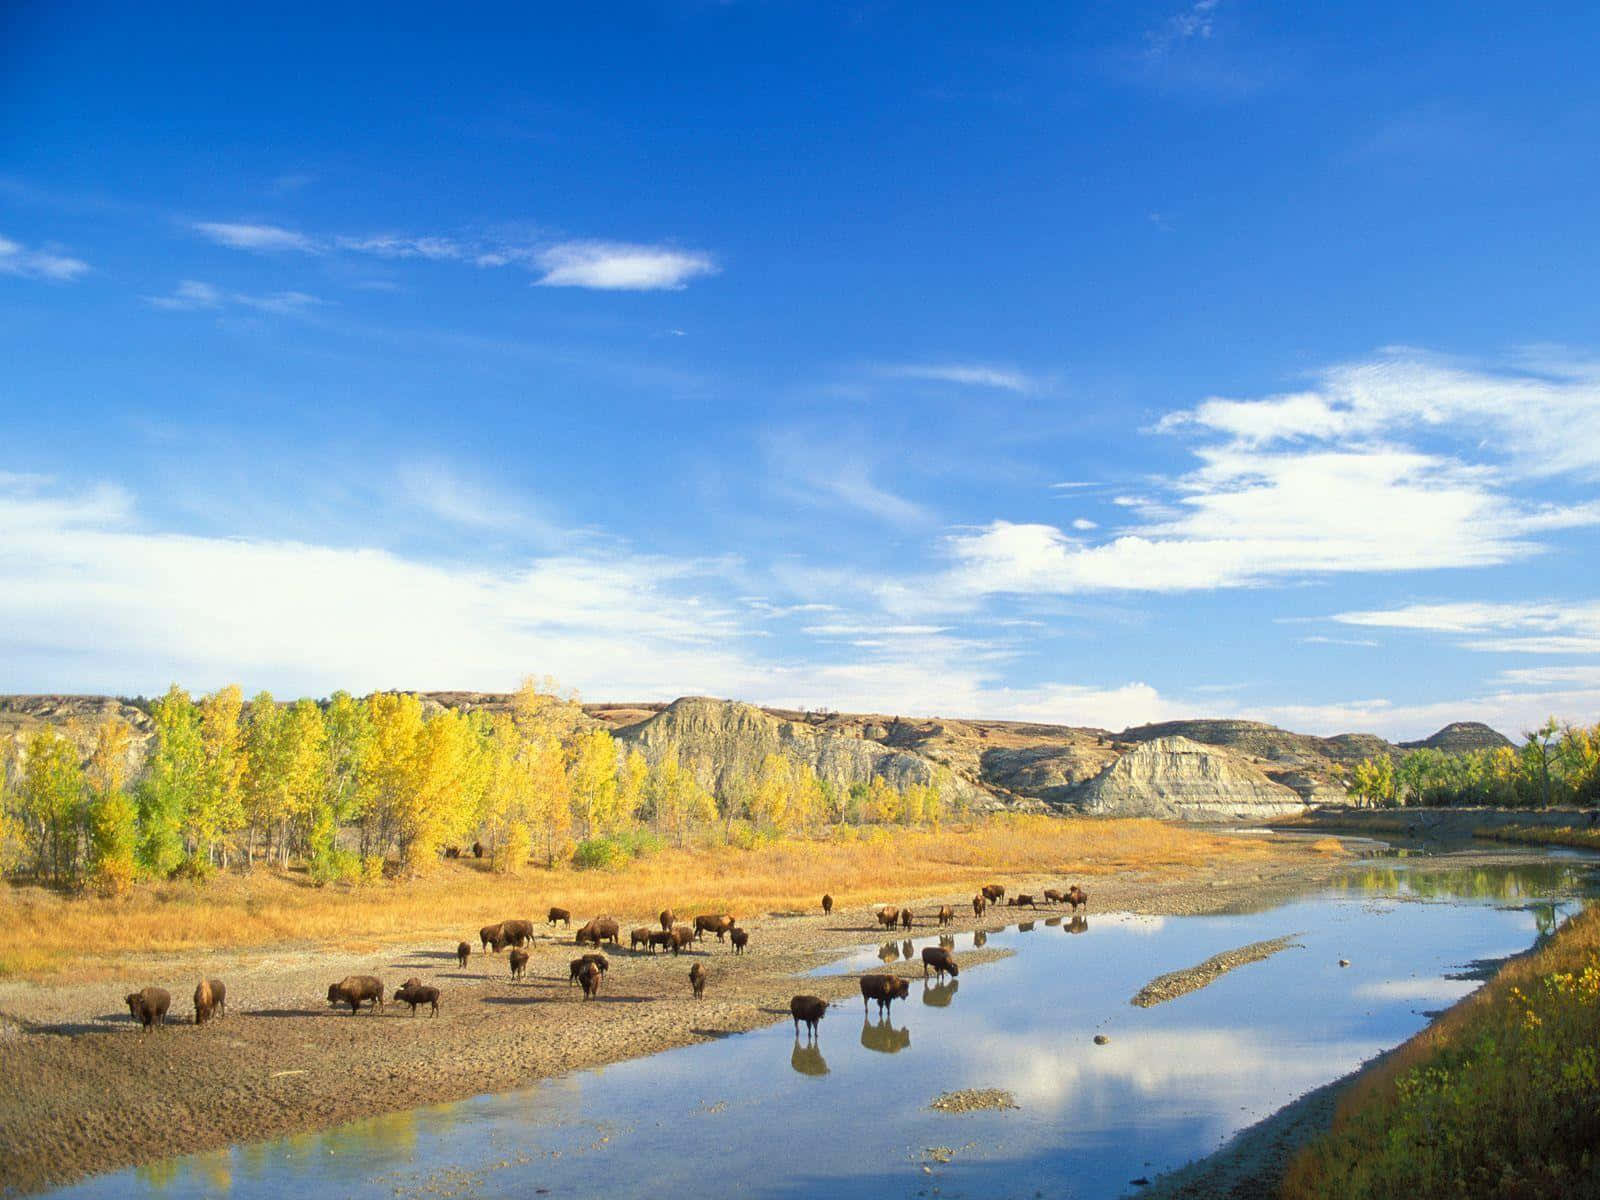 Enjoy the view of North Dakota's lush green valleys